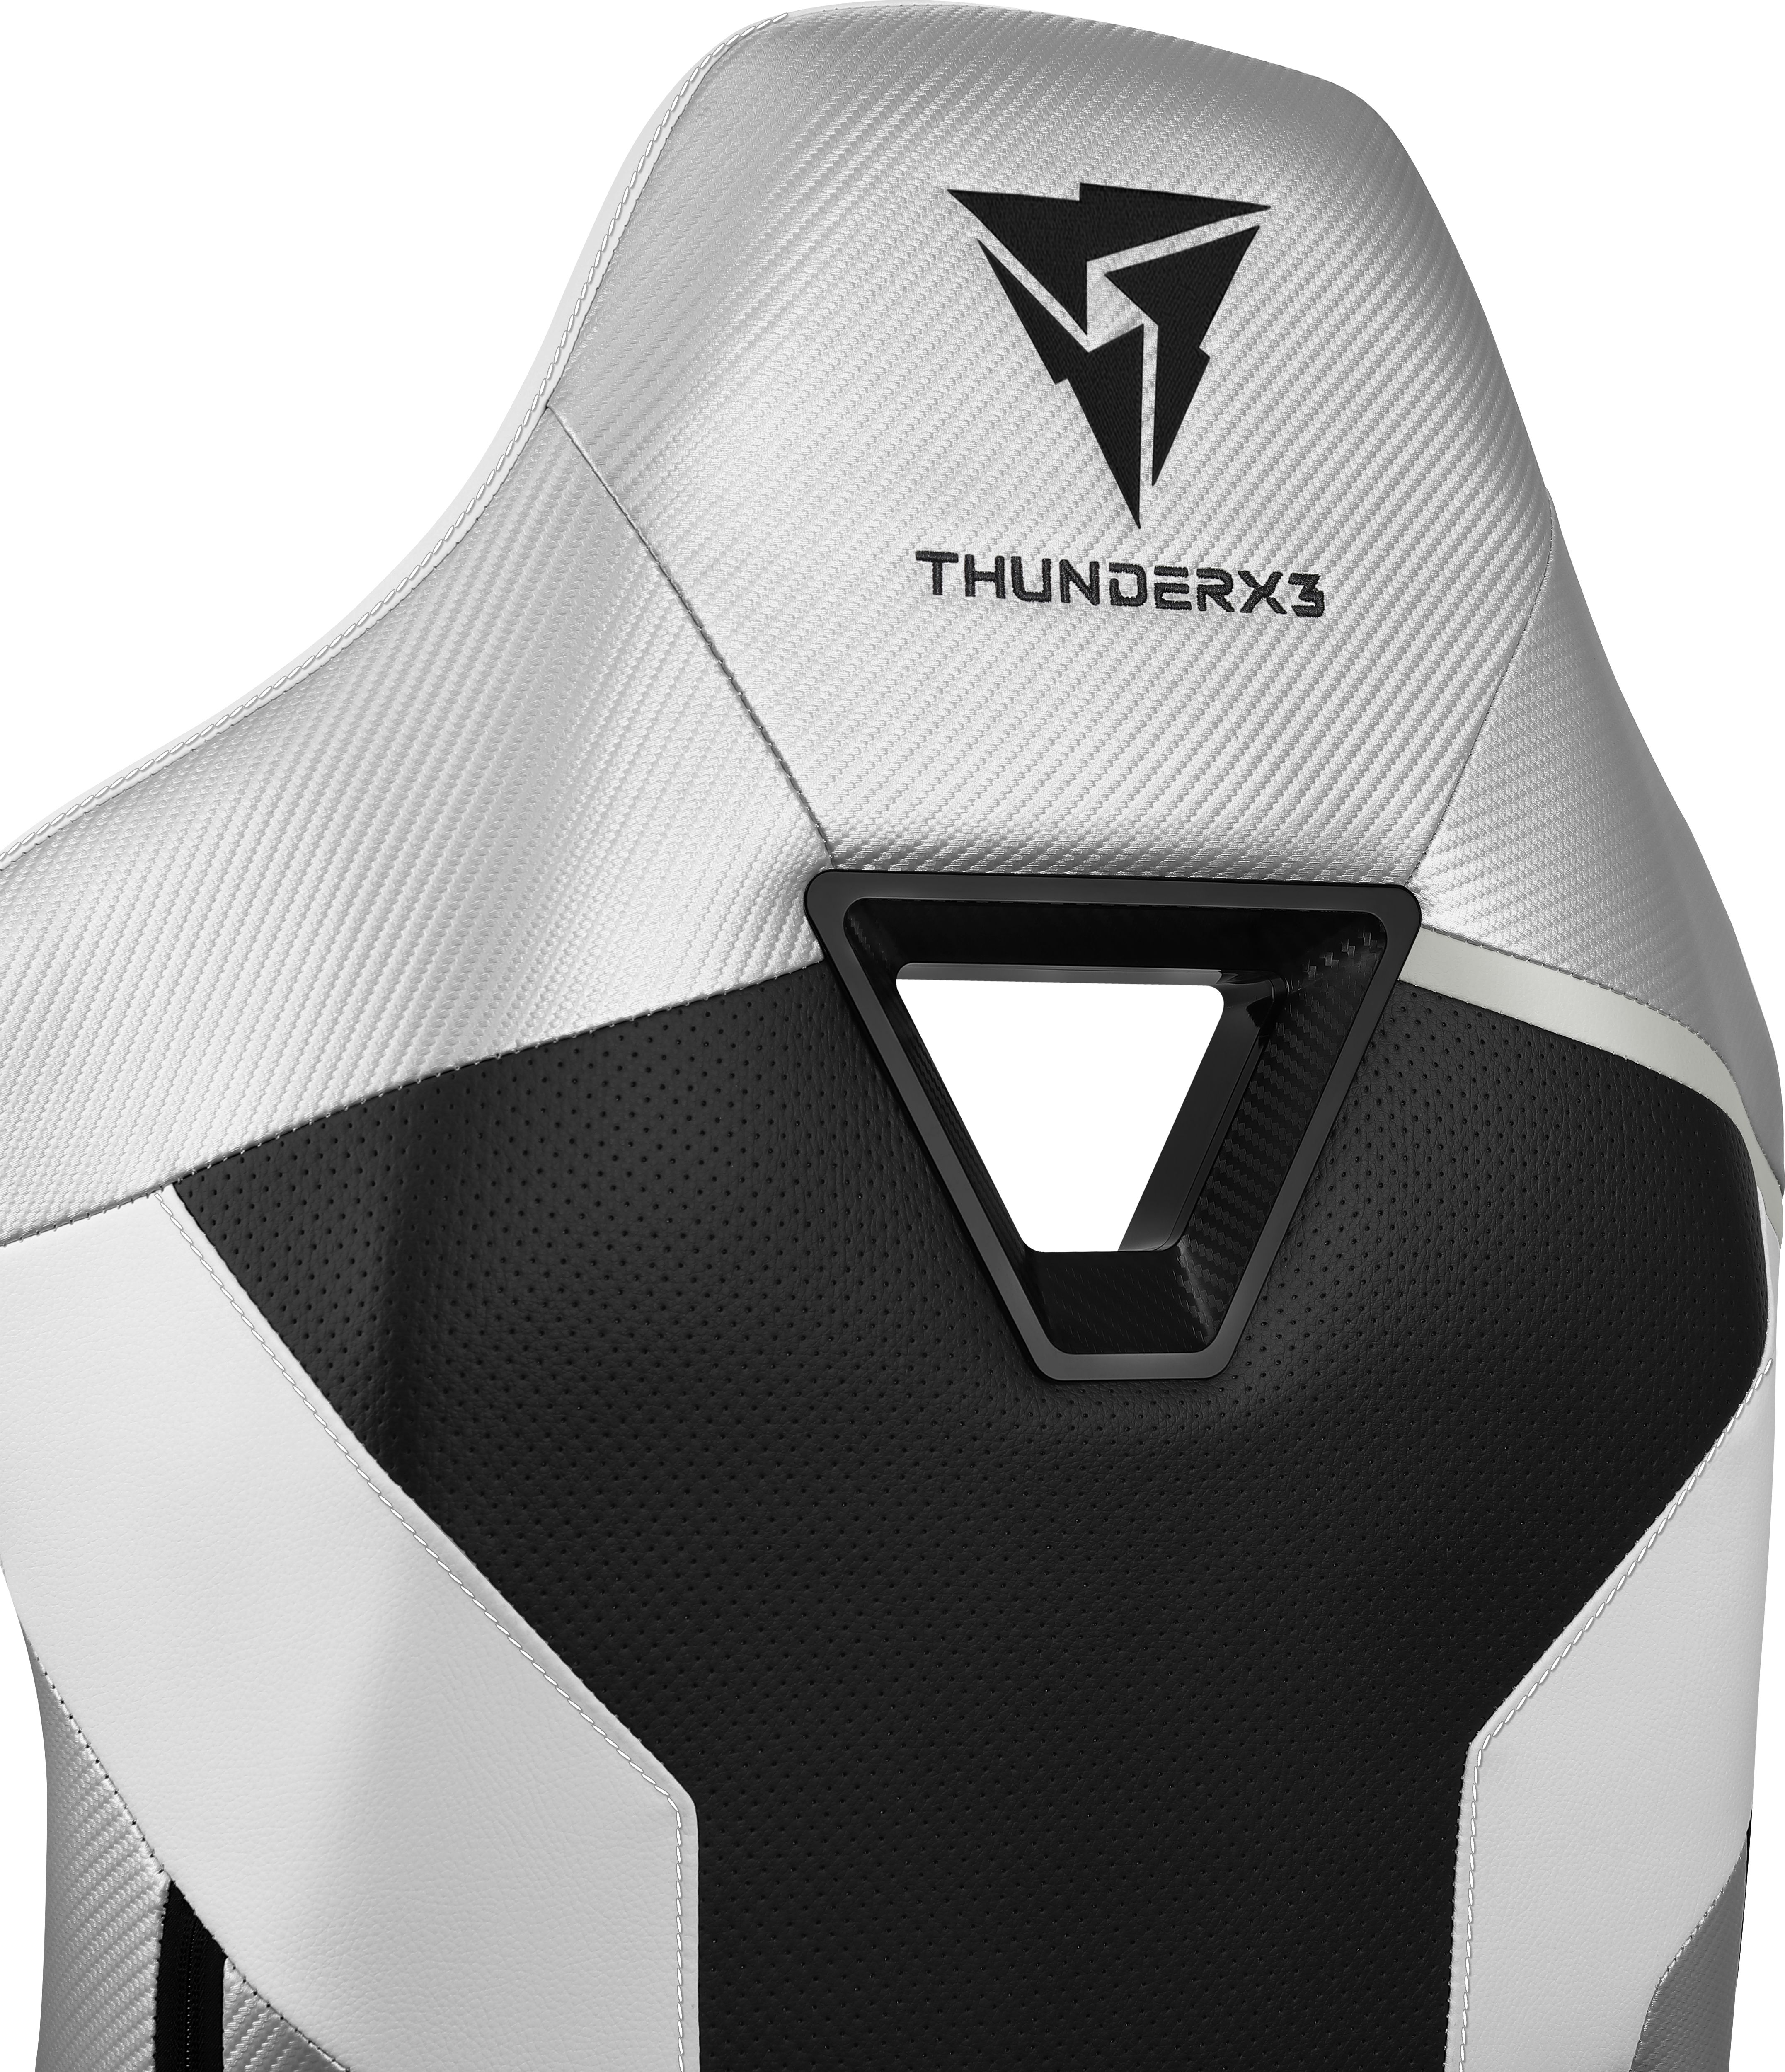 Gamer szék ThunderX3 TC3 All White Fehér 